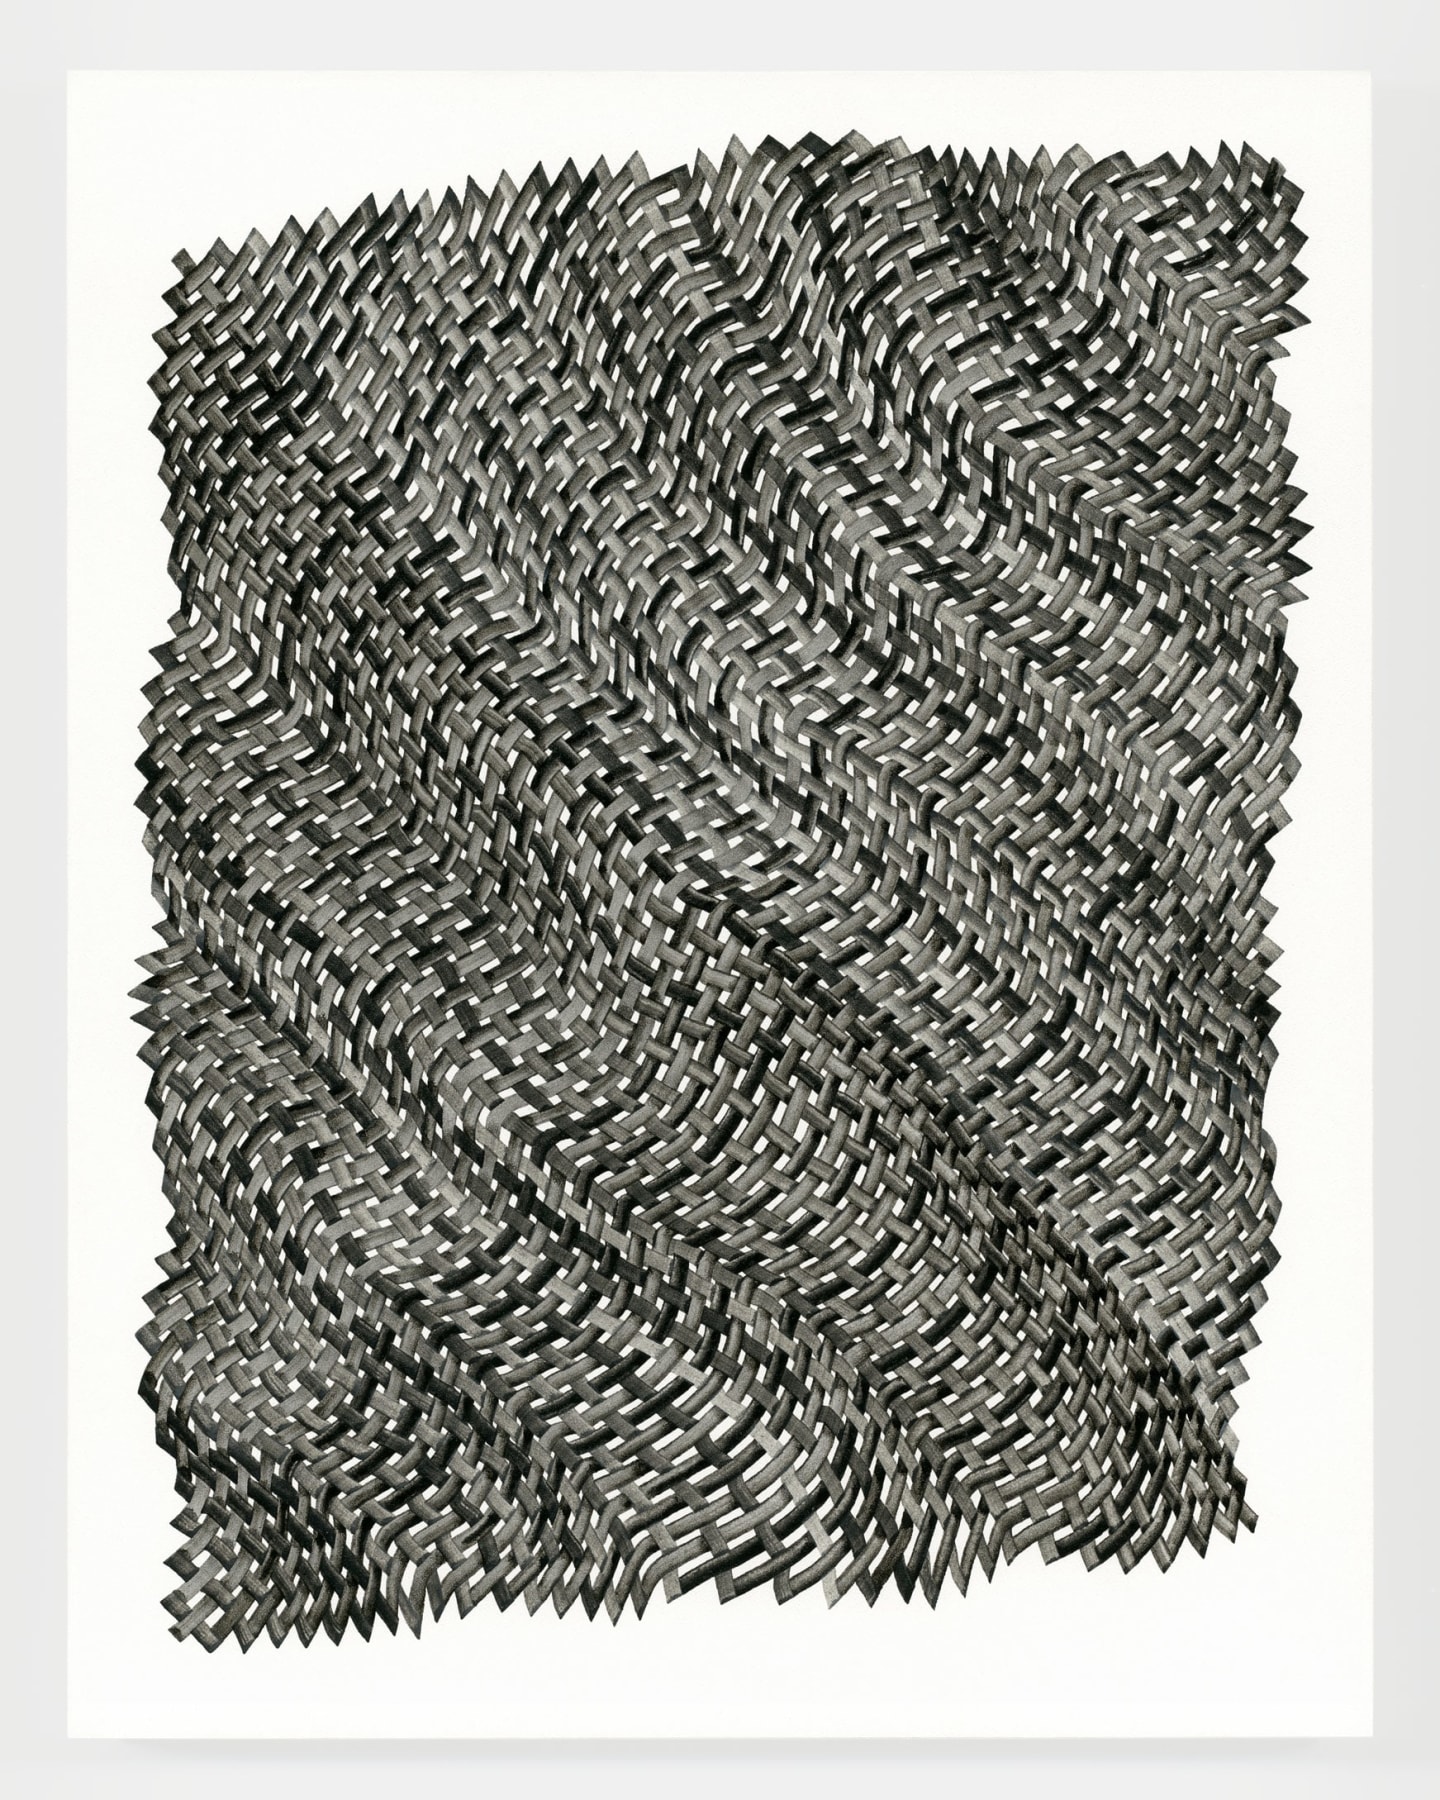 Dana Piazza, Woven Lines 49